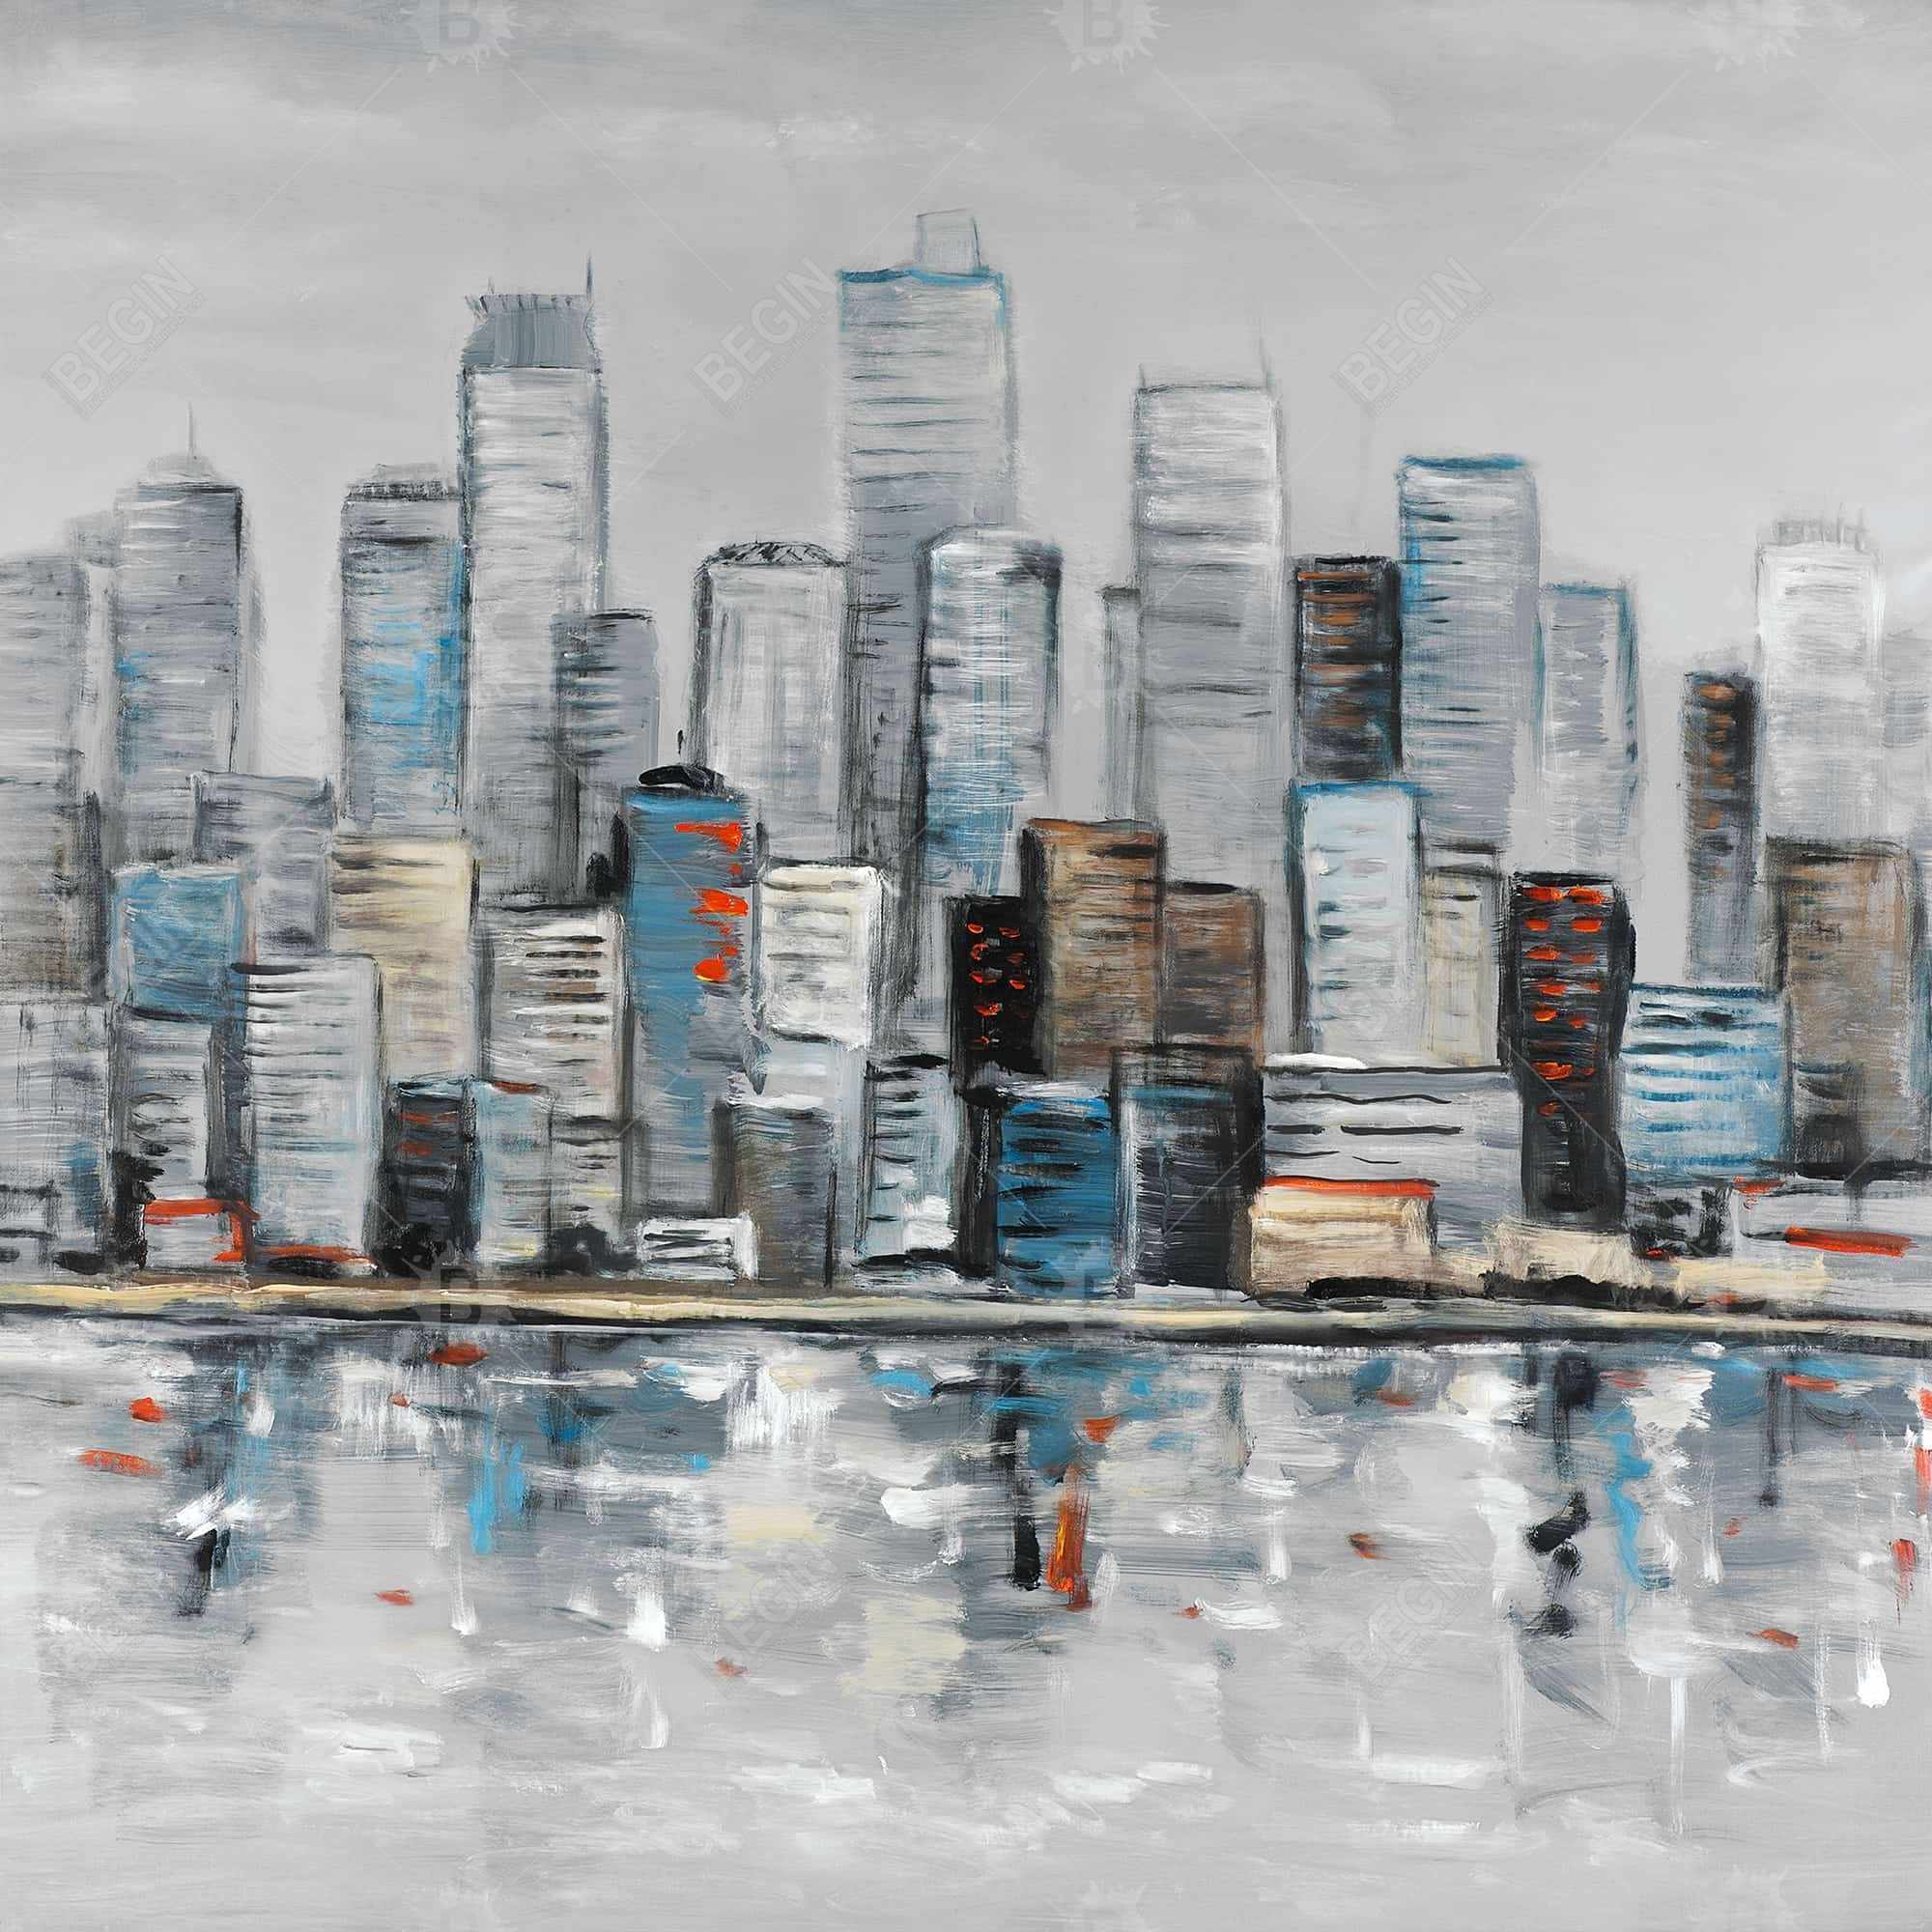 Abstract urban skyline